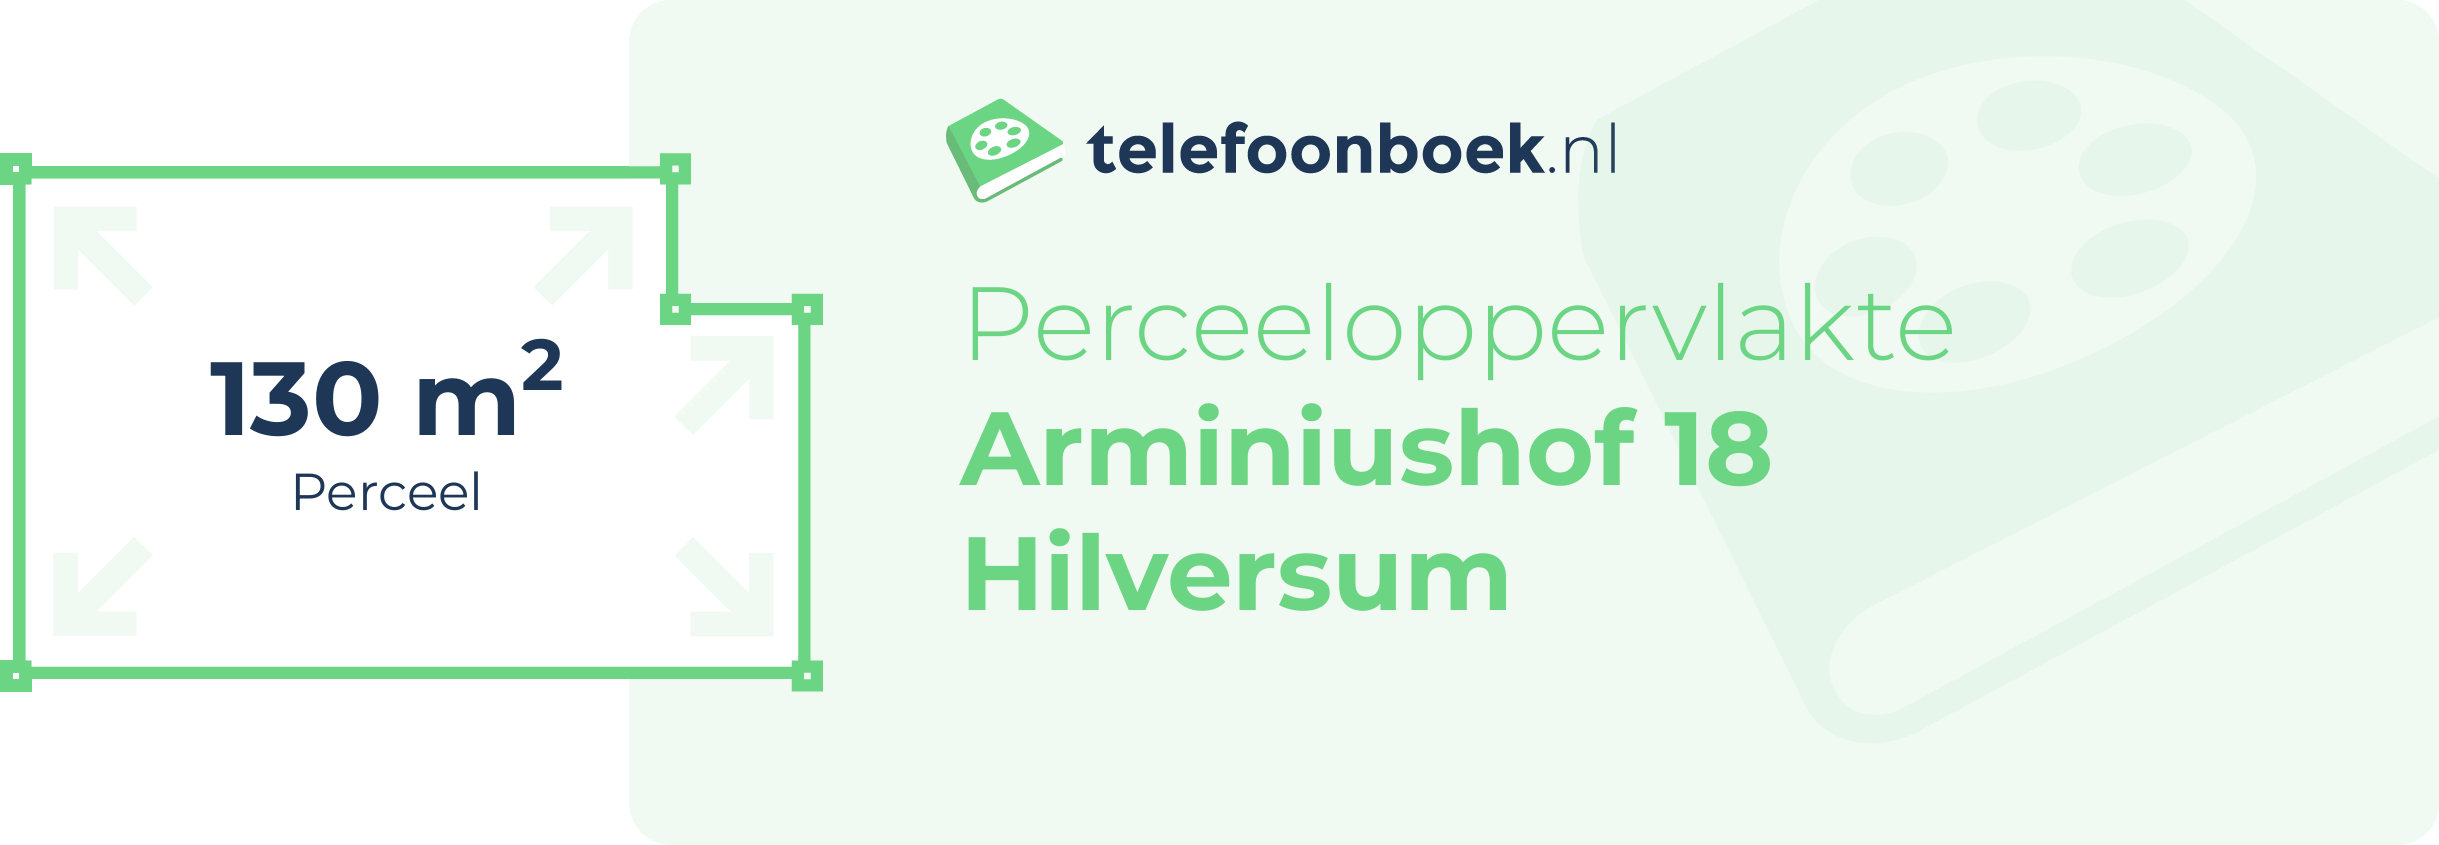 Perceeloppervlakte Arminiushof 18 Hilversum